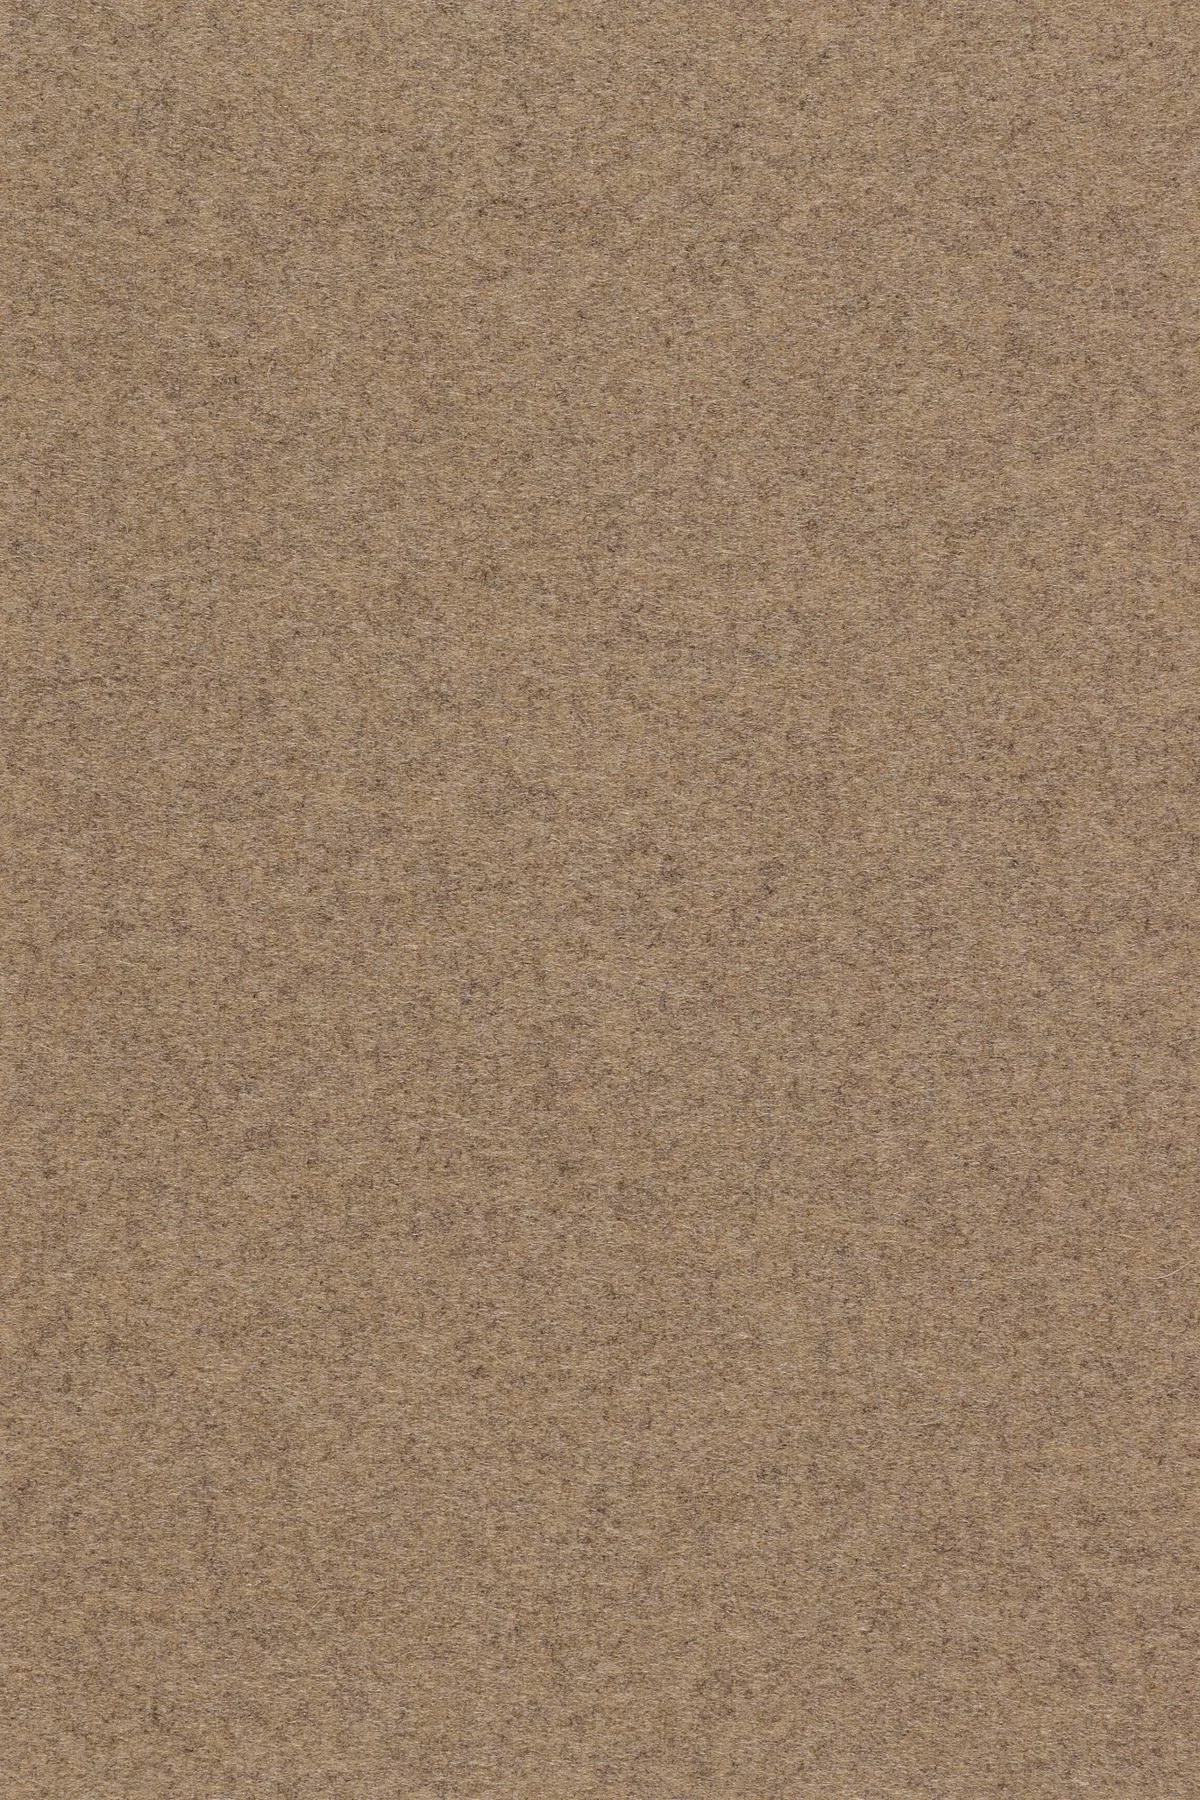 Fabric sample Divina MD 453 brown